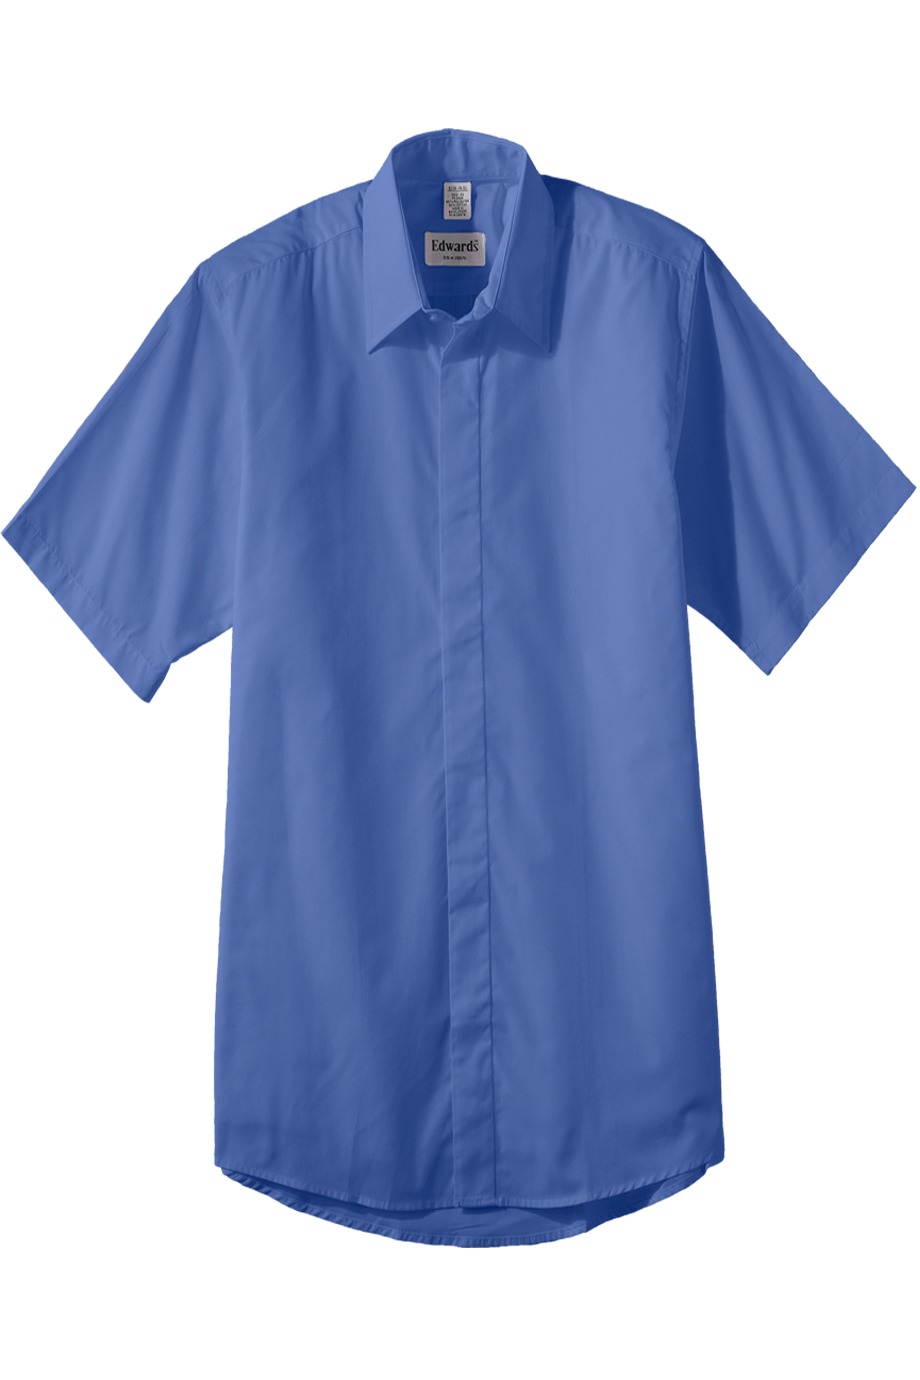 Edwards Garment 1240 - Men's Short Sleeve Cafe Shirt